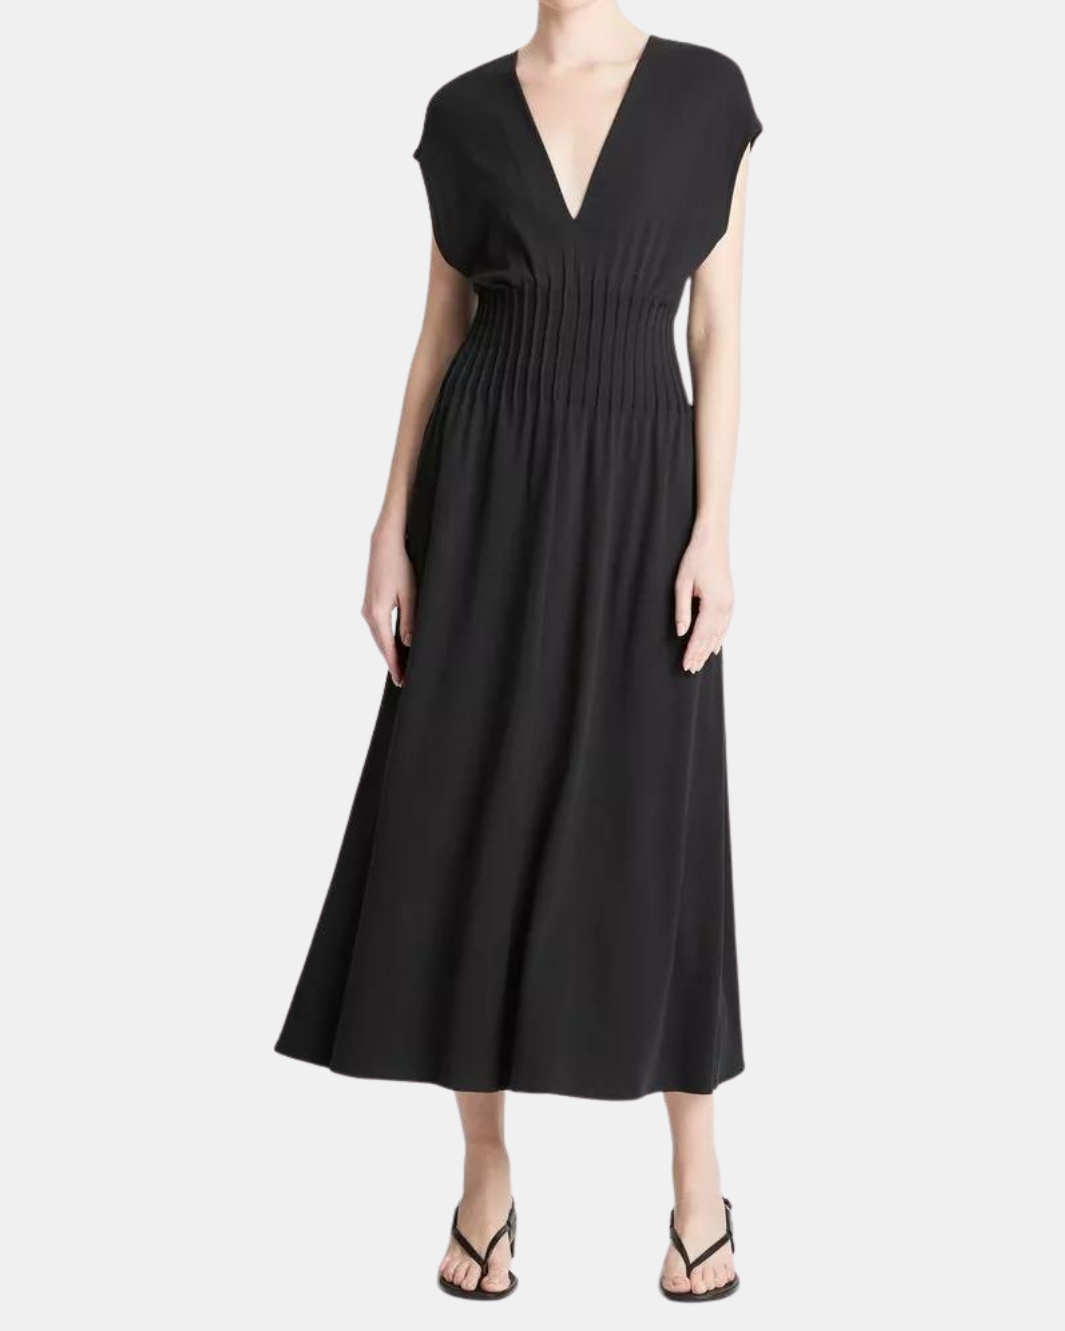 PINTUCK COTTON V NECK DRESS IN BLACK - Romi Boutique